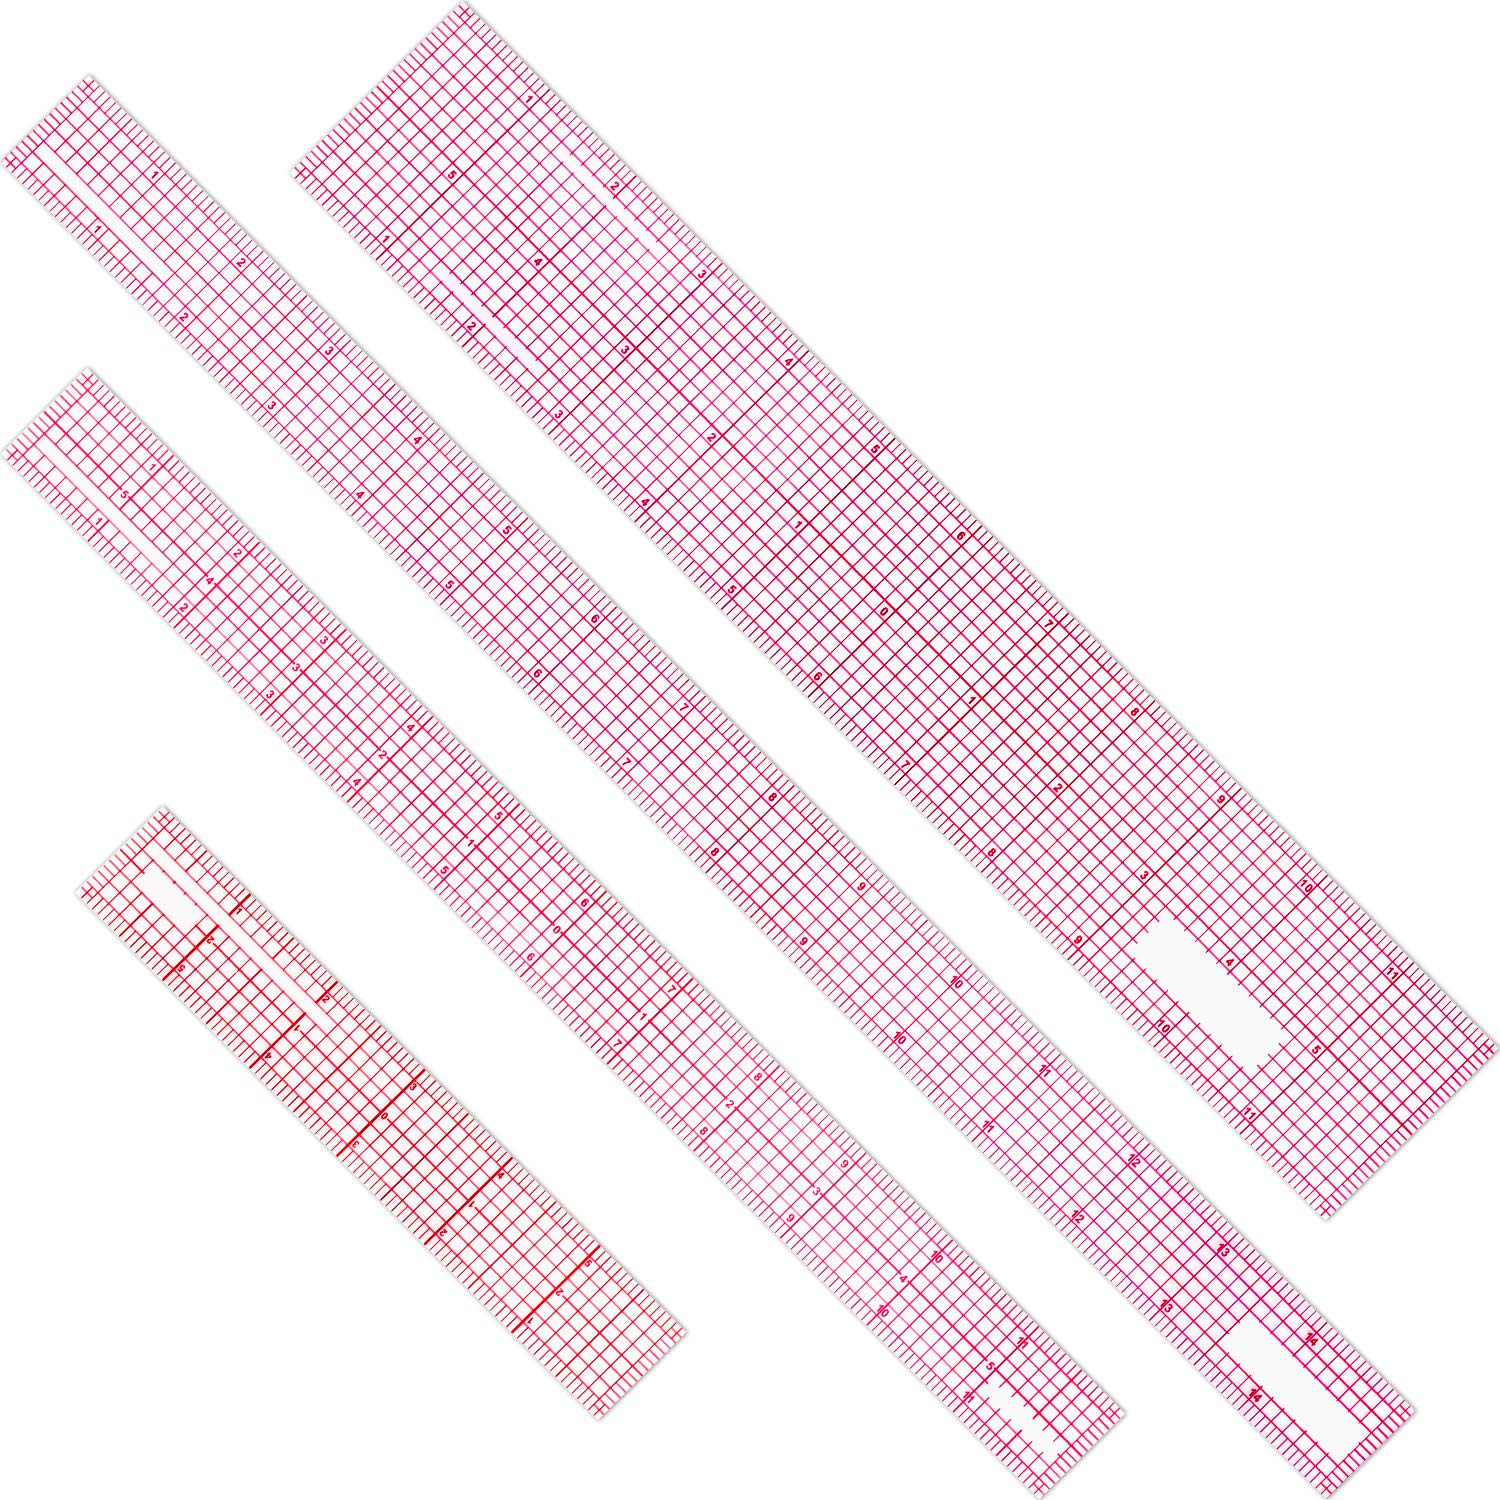 4 Pieces Clear Plastic Ruler Grid Ruler Transparent Ruler Metric